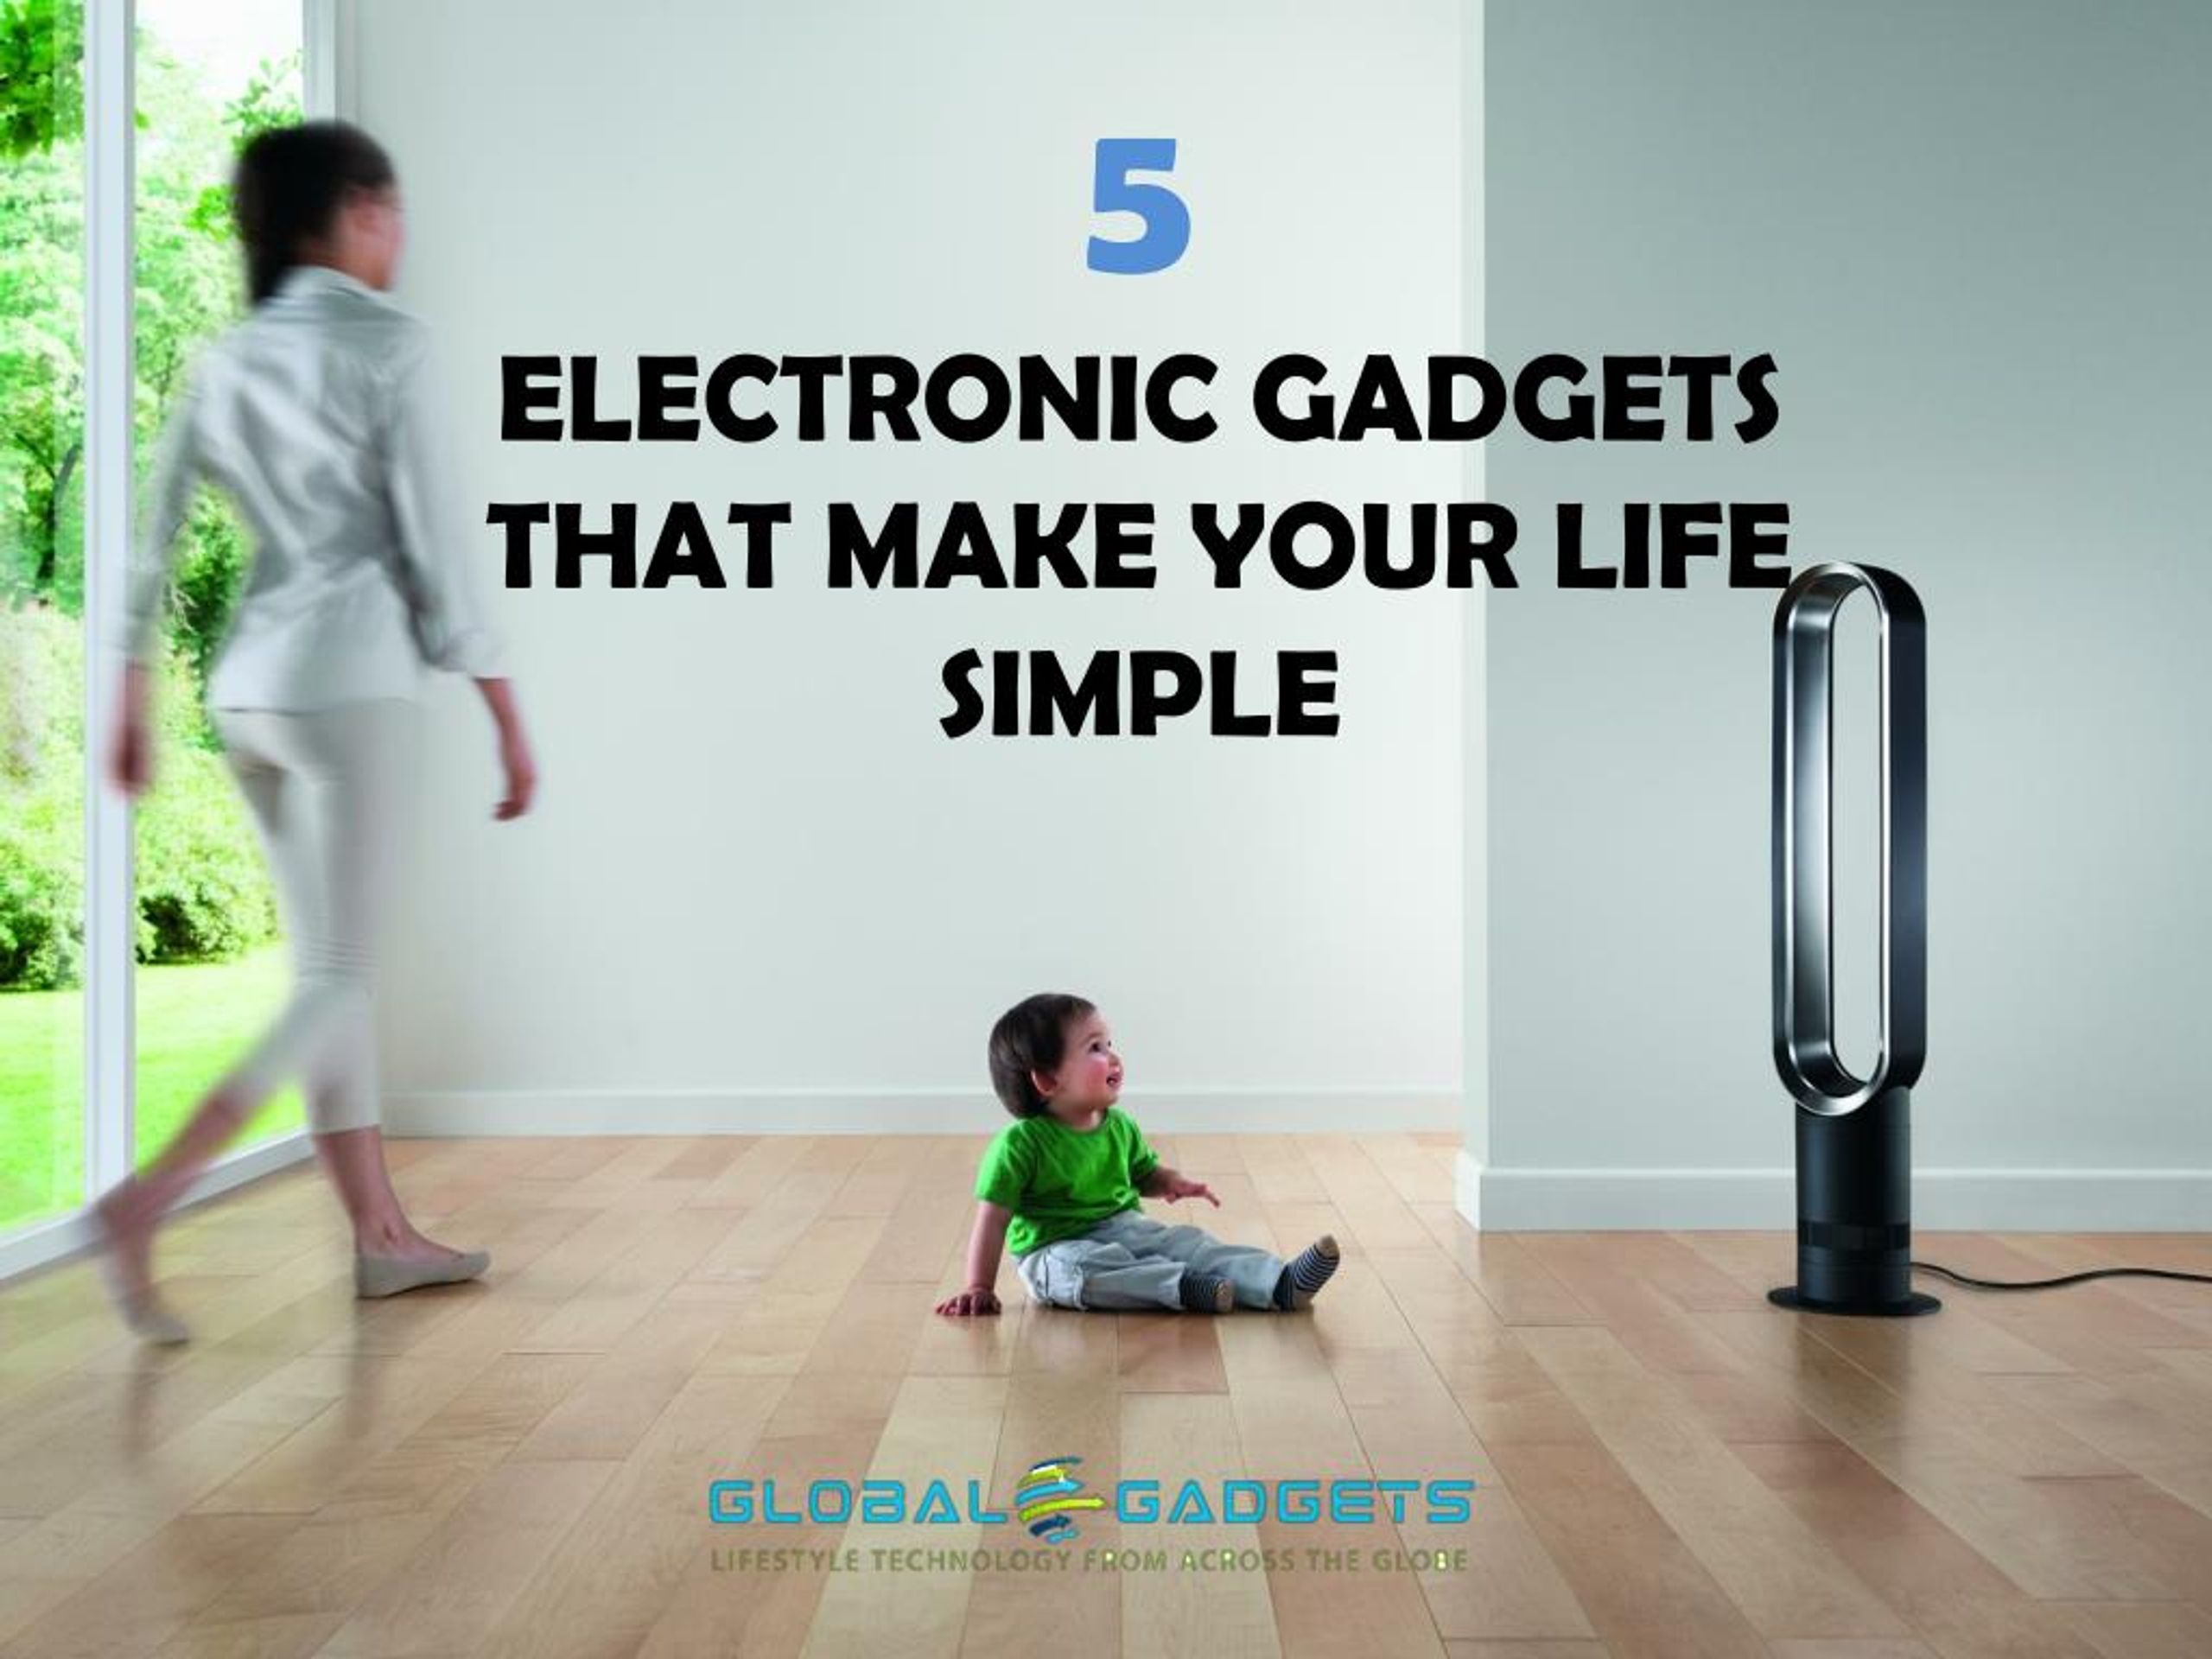 https://image4.slideserve.com/7349140/5-electronic-gadgets-that-make-your-life-simple-l.jpg